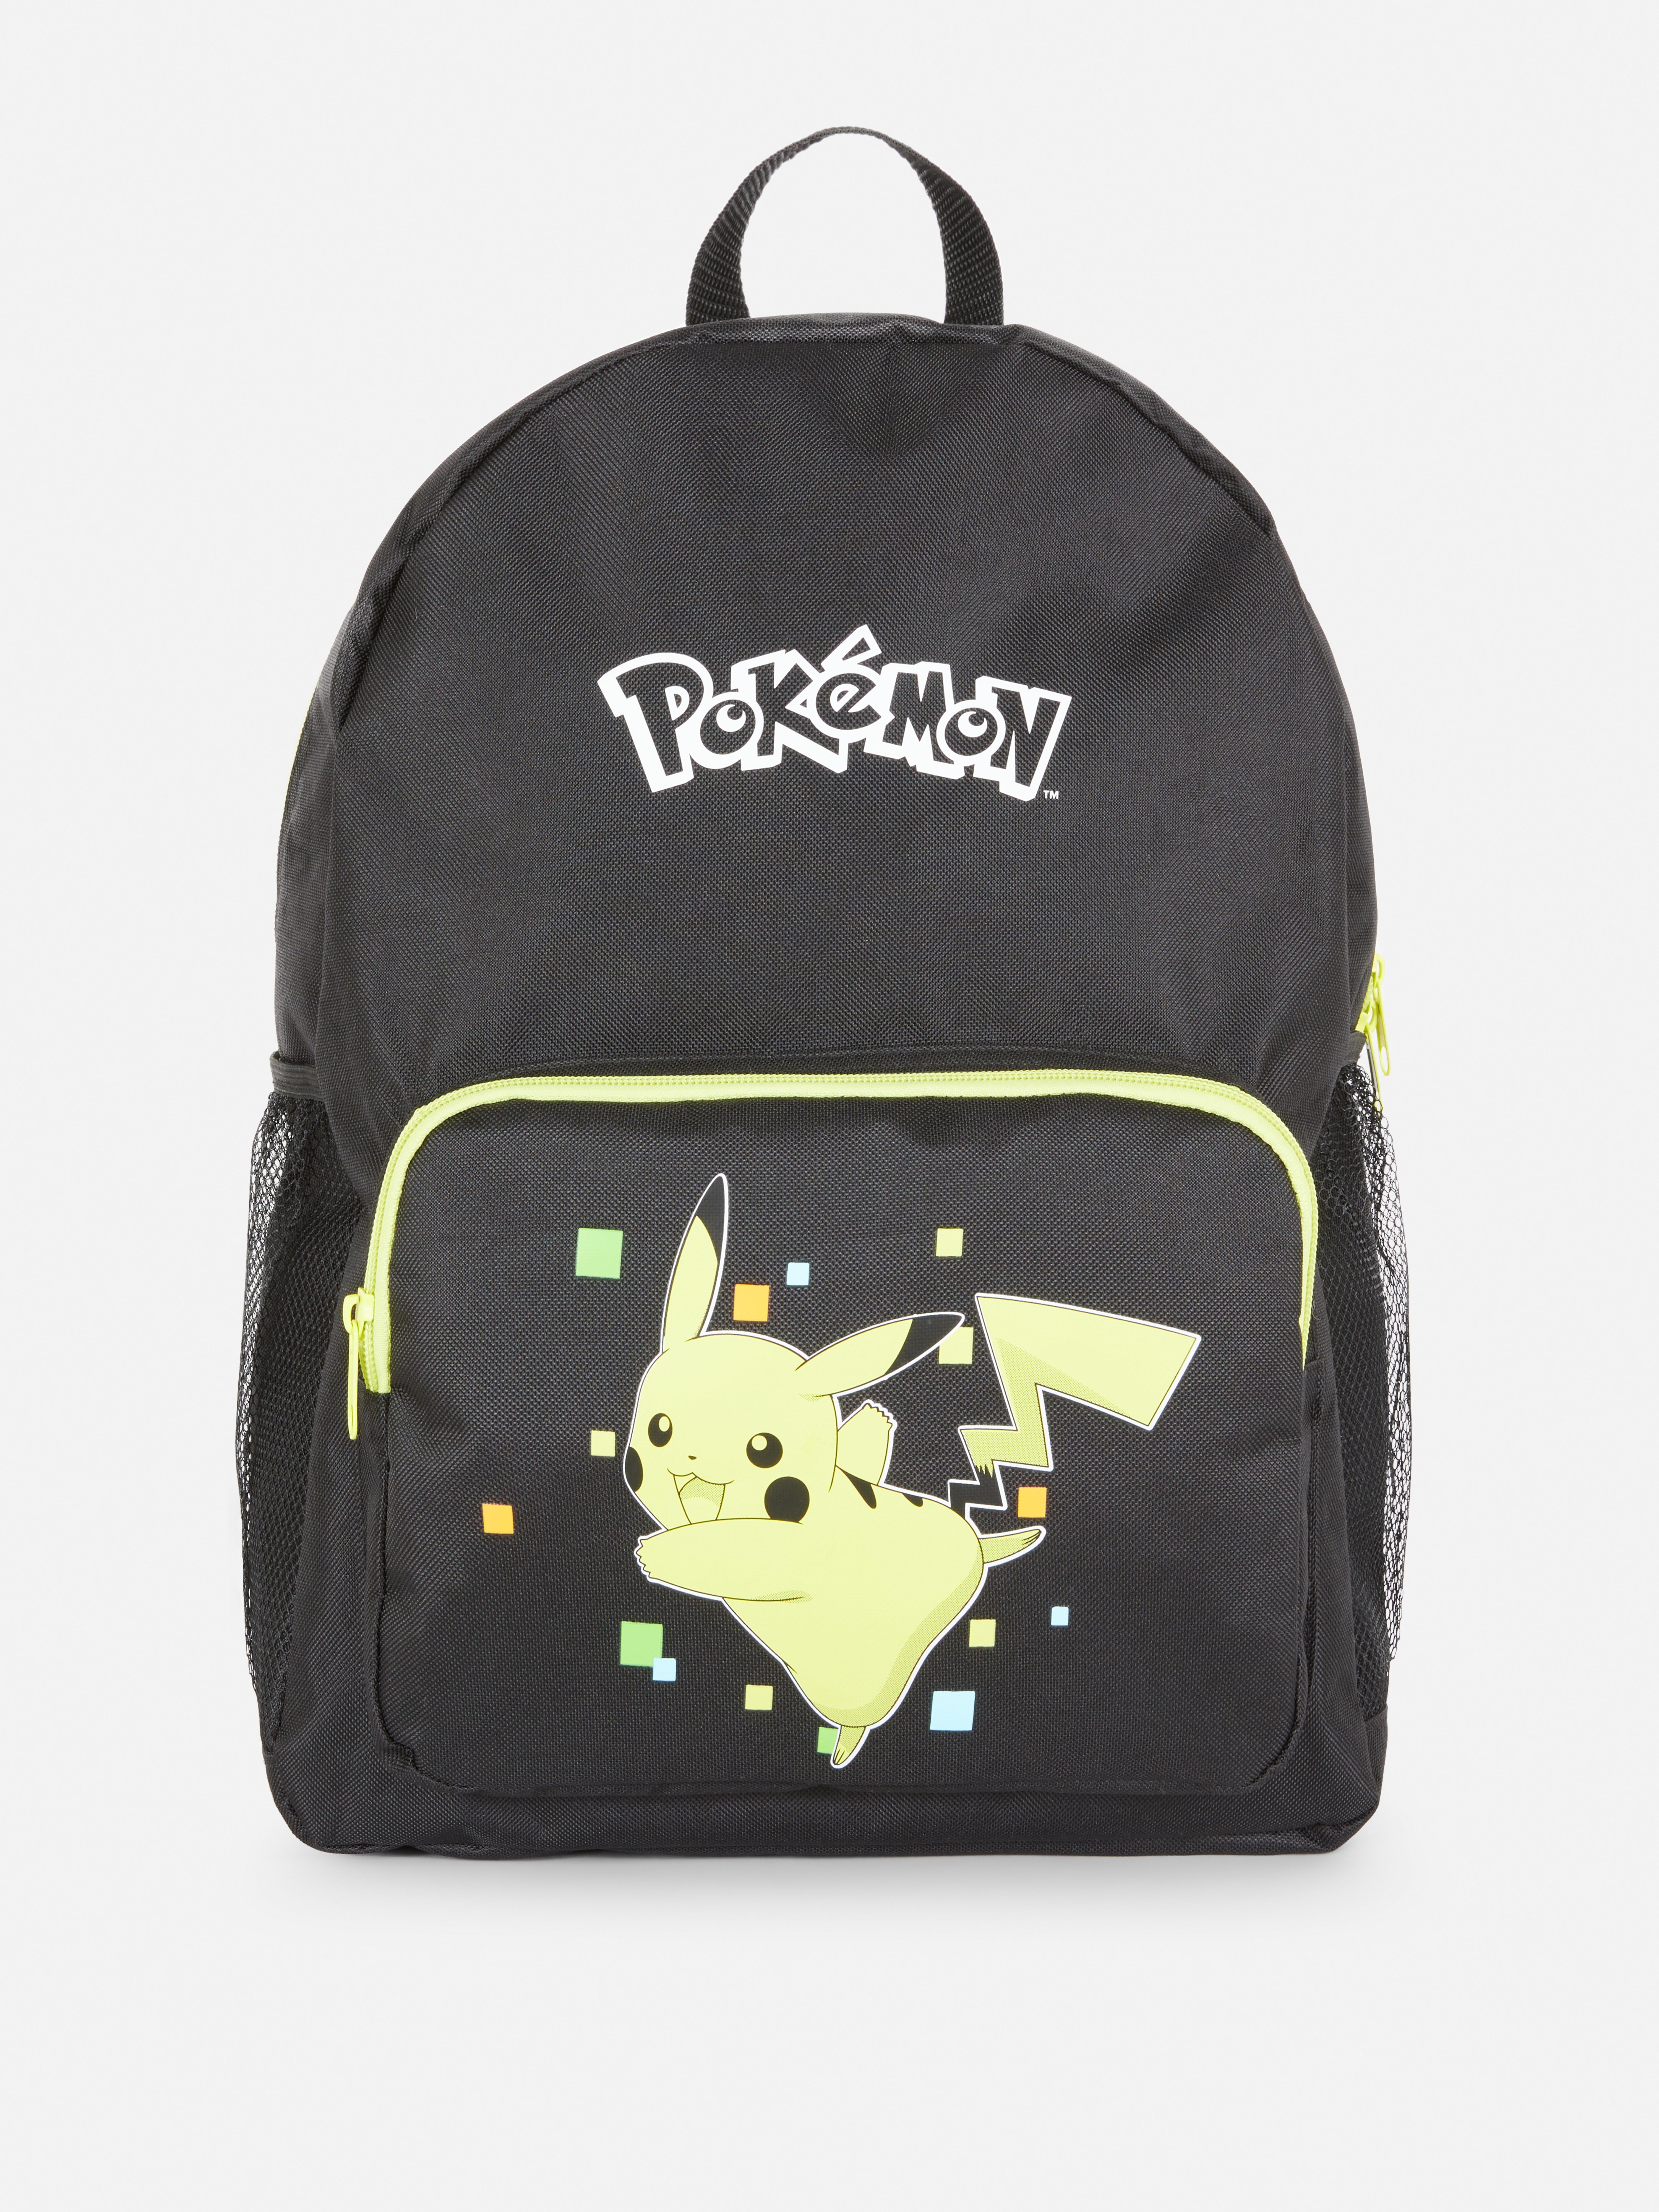 Pokémon Print Backpack